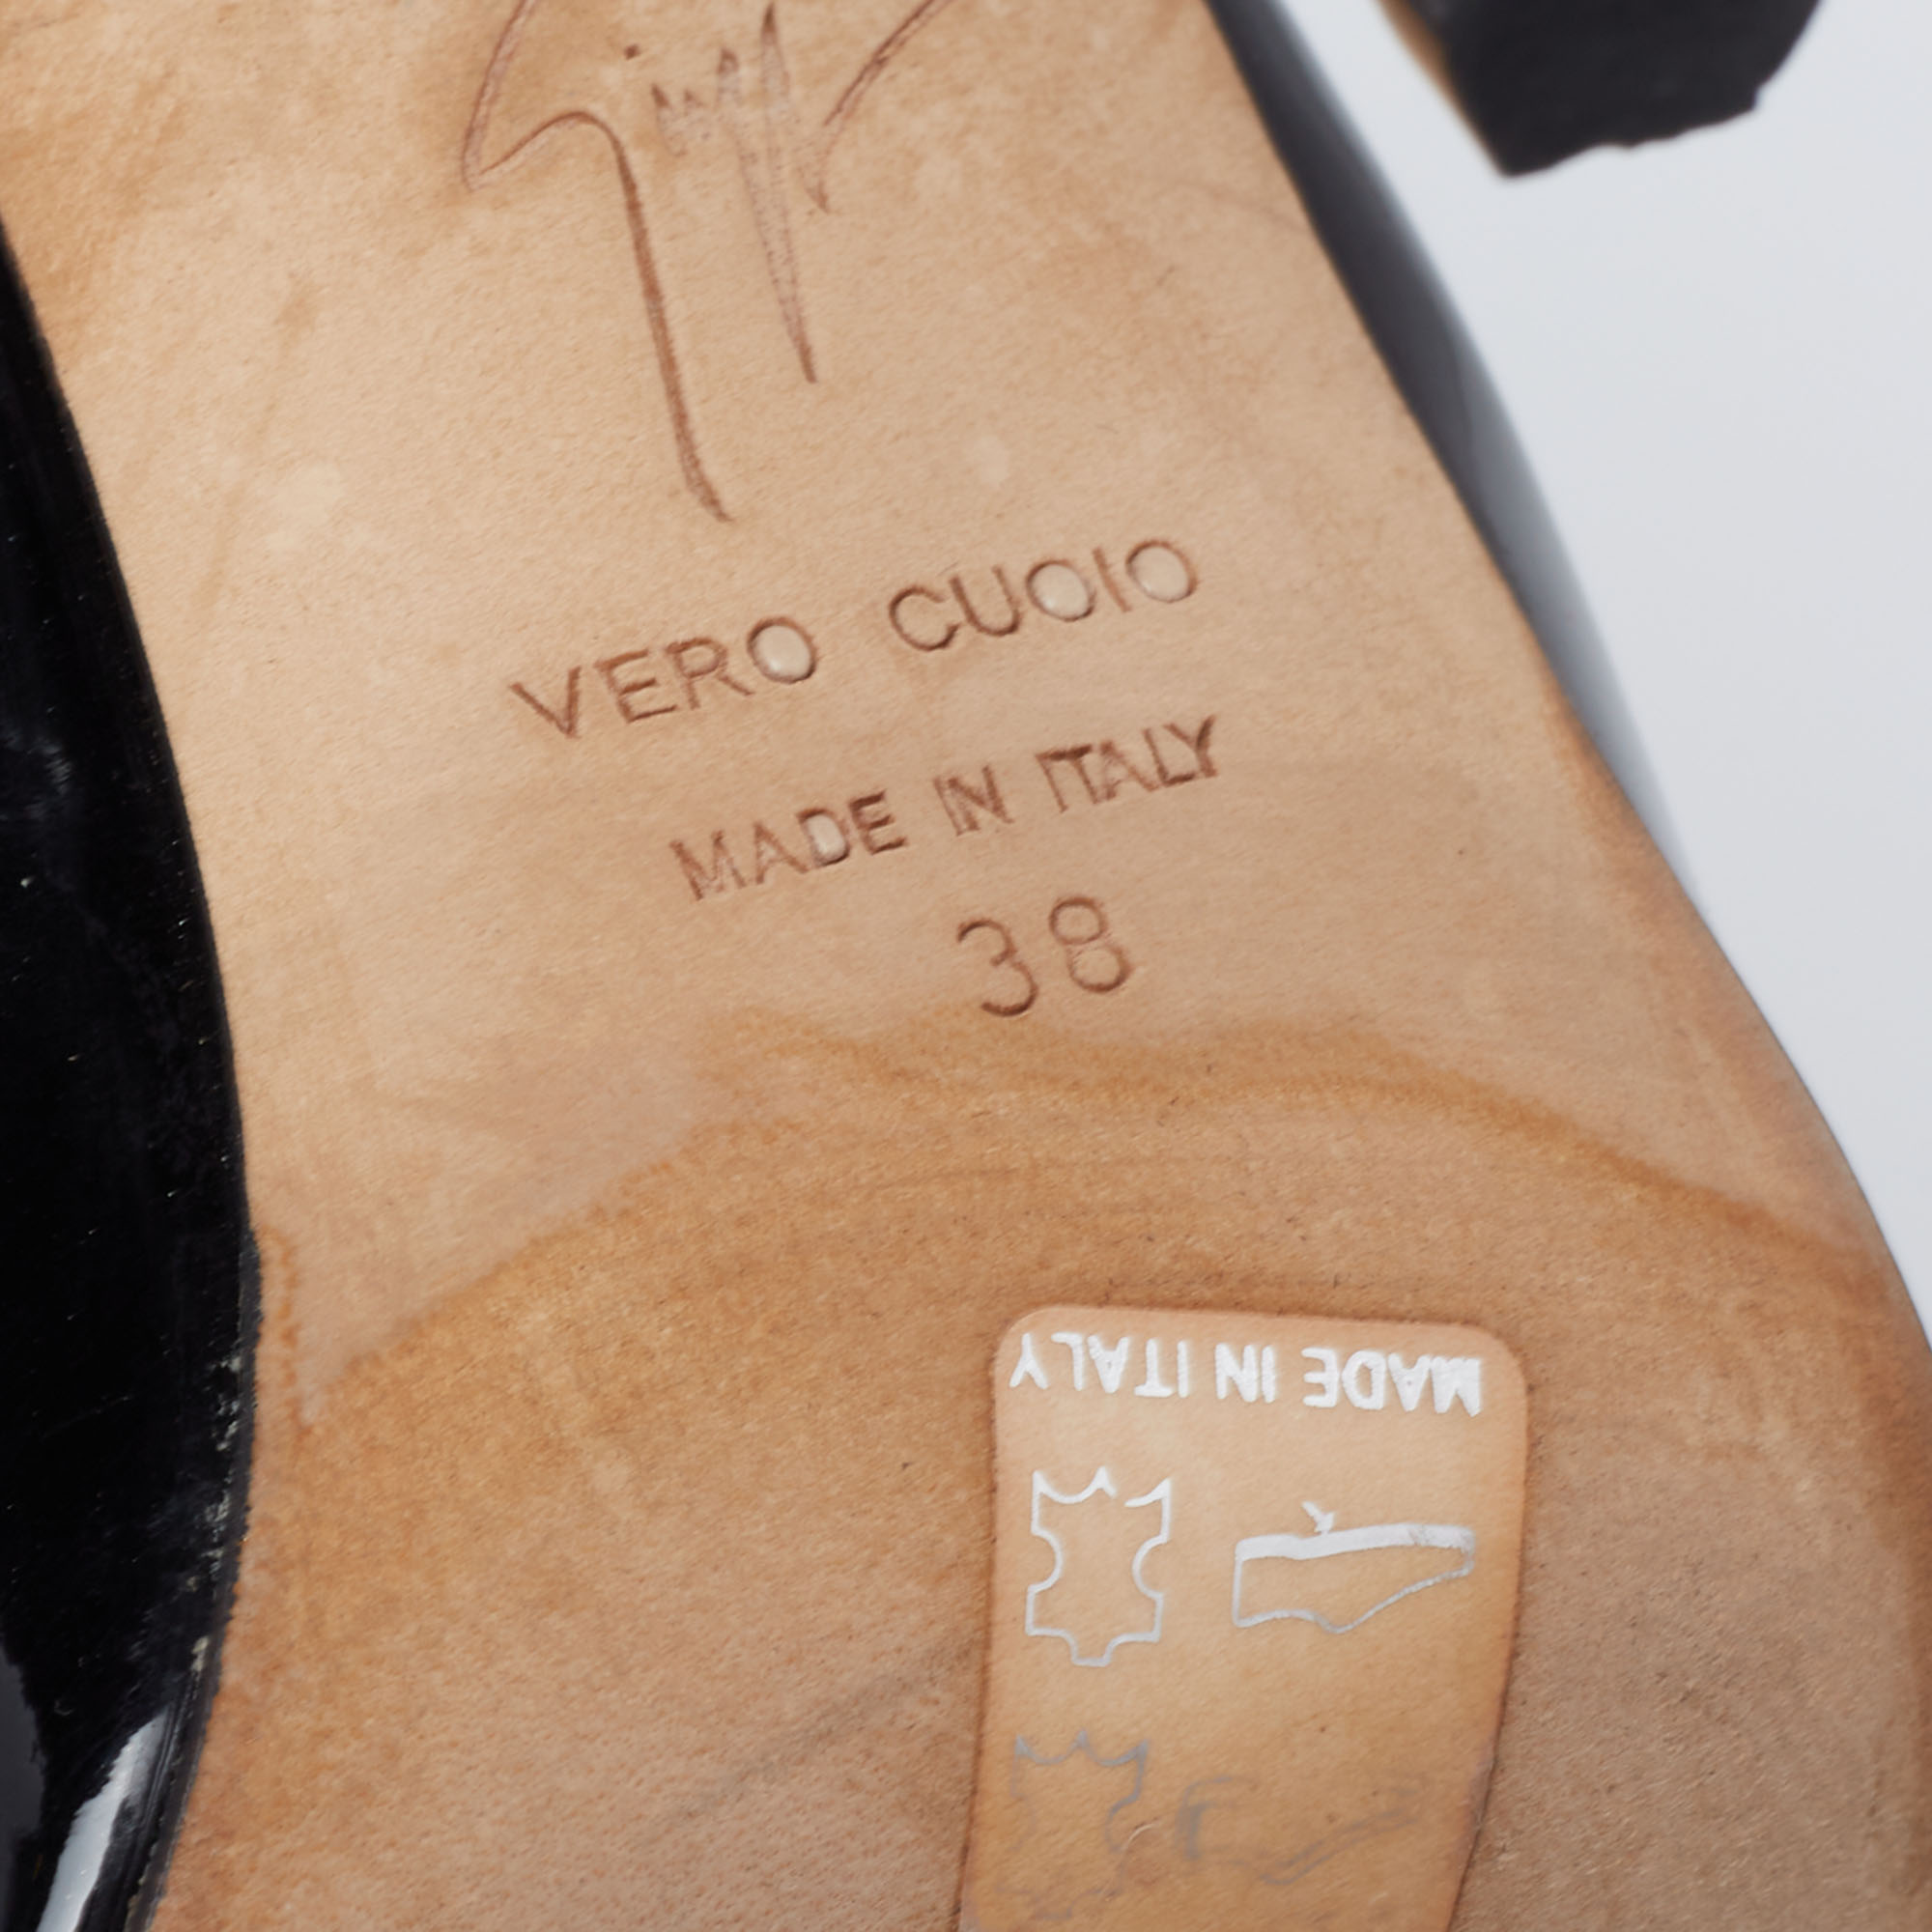 Giuseppe Zanotti Black Patent Leather Peep Toe Slingback Platform Pumps Size 38